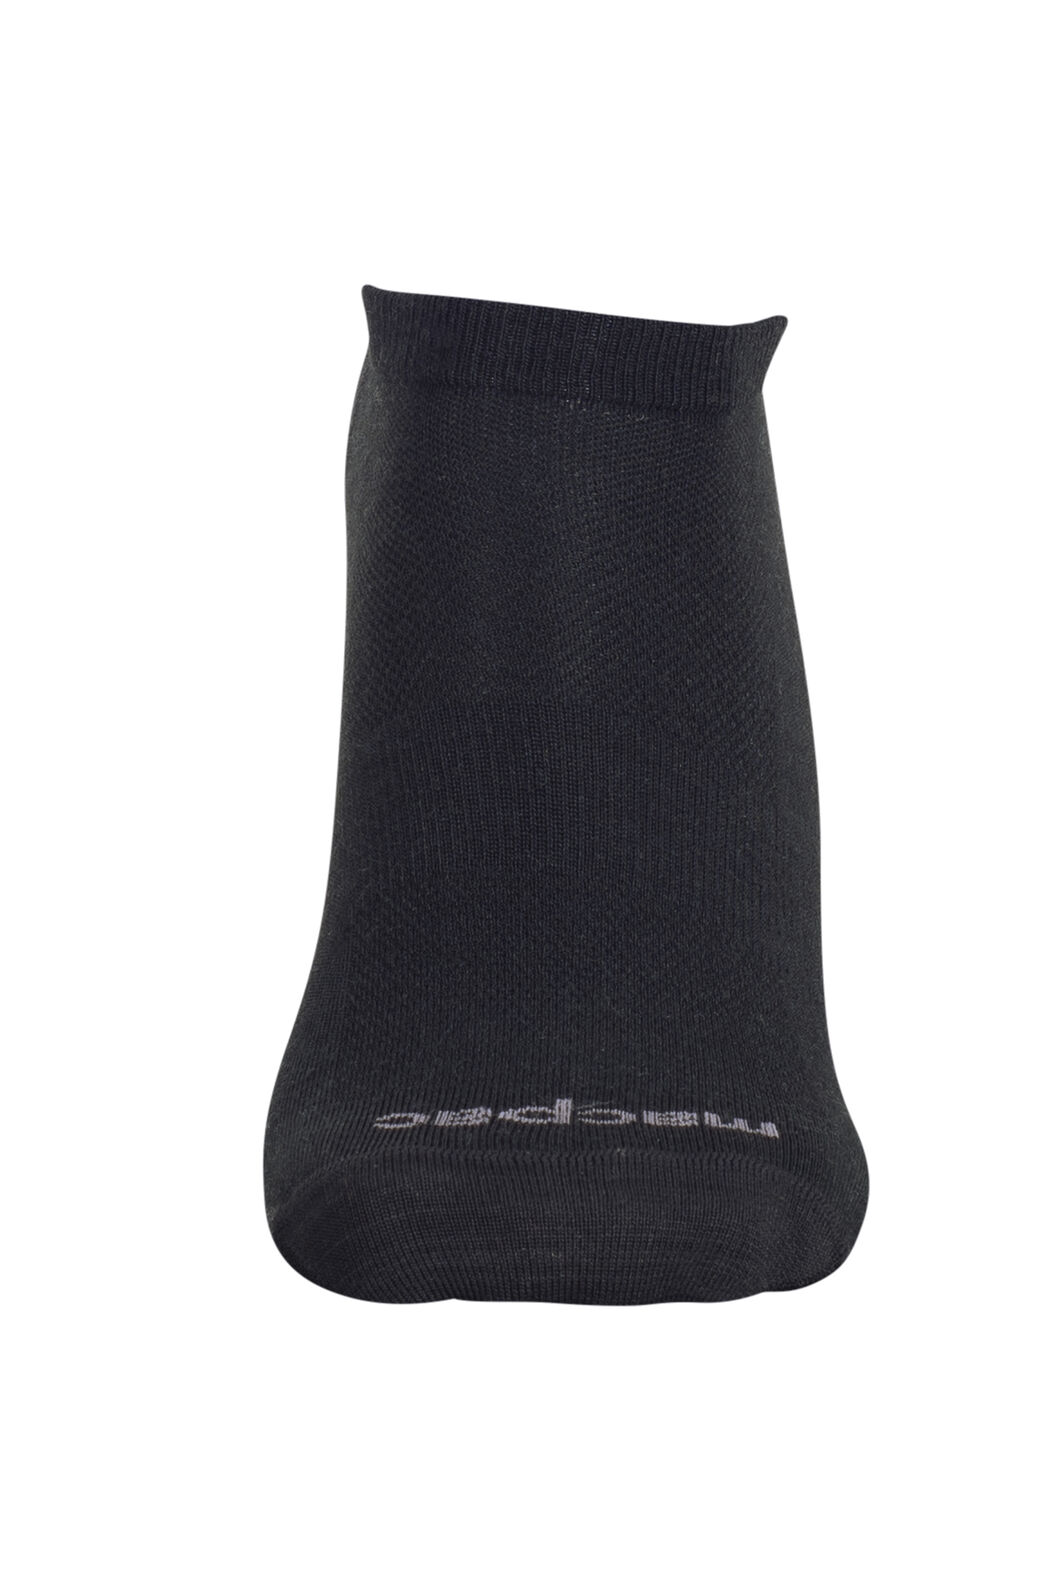 Macpac Everyday Ankle Sock — 2 Pack | Macpac